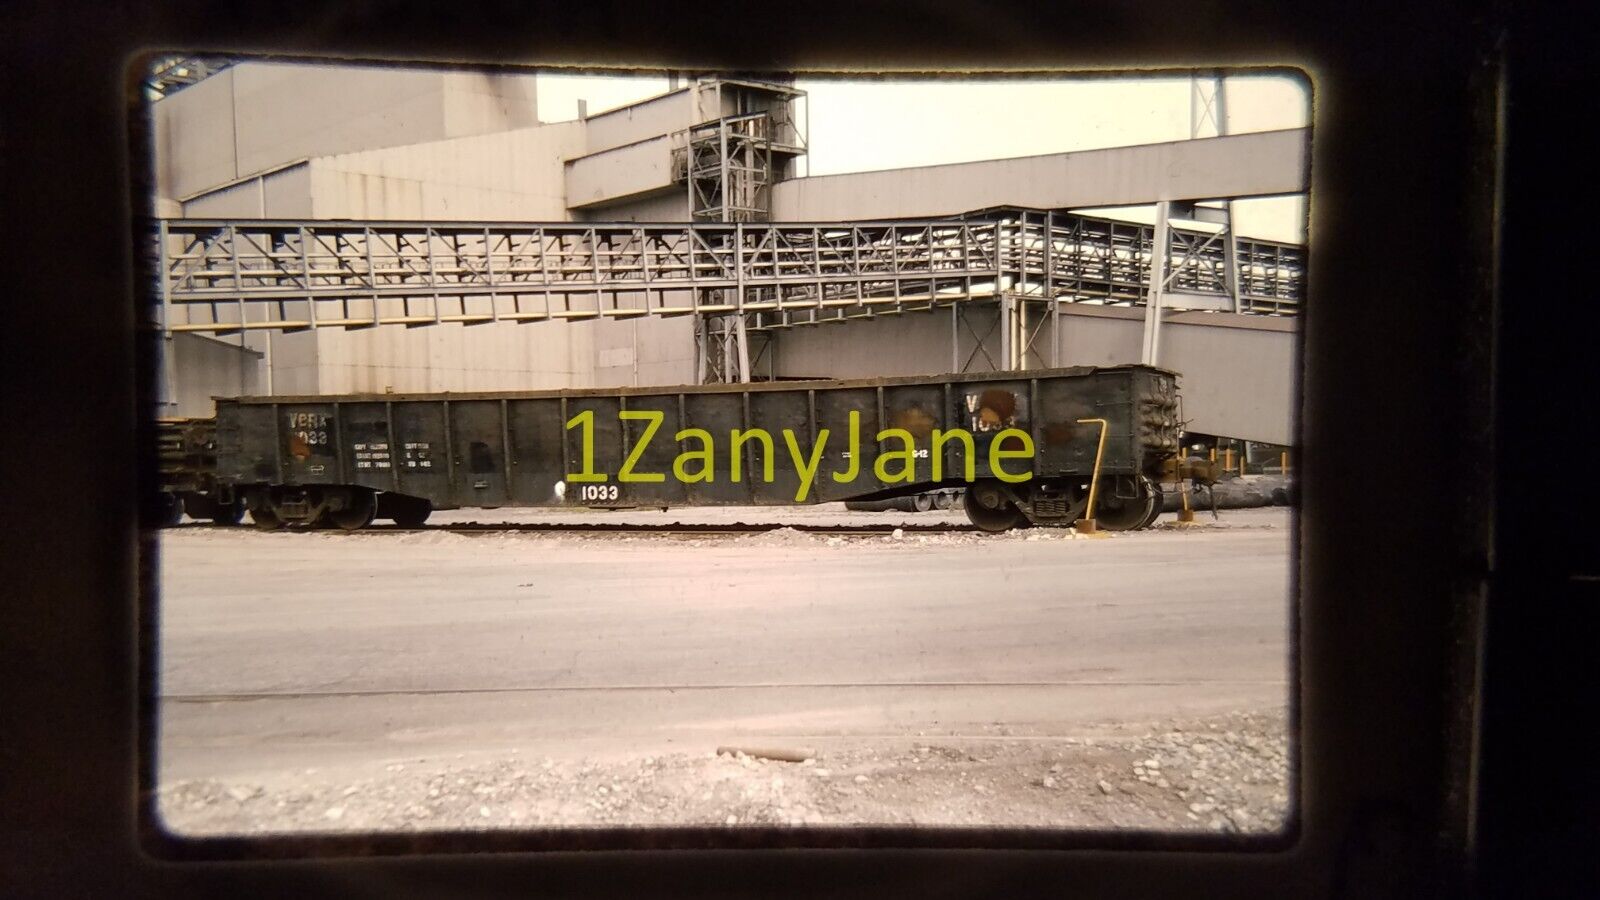 OS16 TRAIN ENGINE LOCOMOTIVE 35MM SLIDE VERX 1033, CANTON, OH 1995